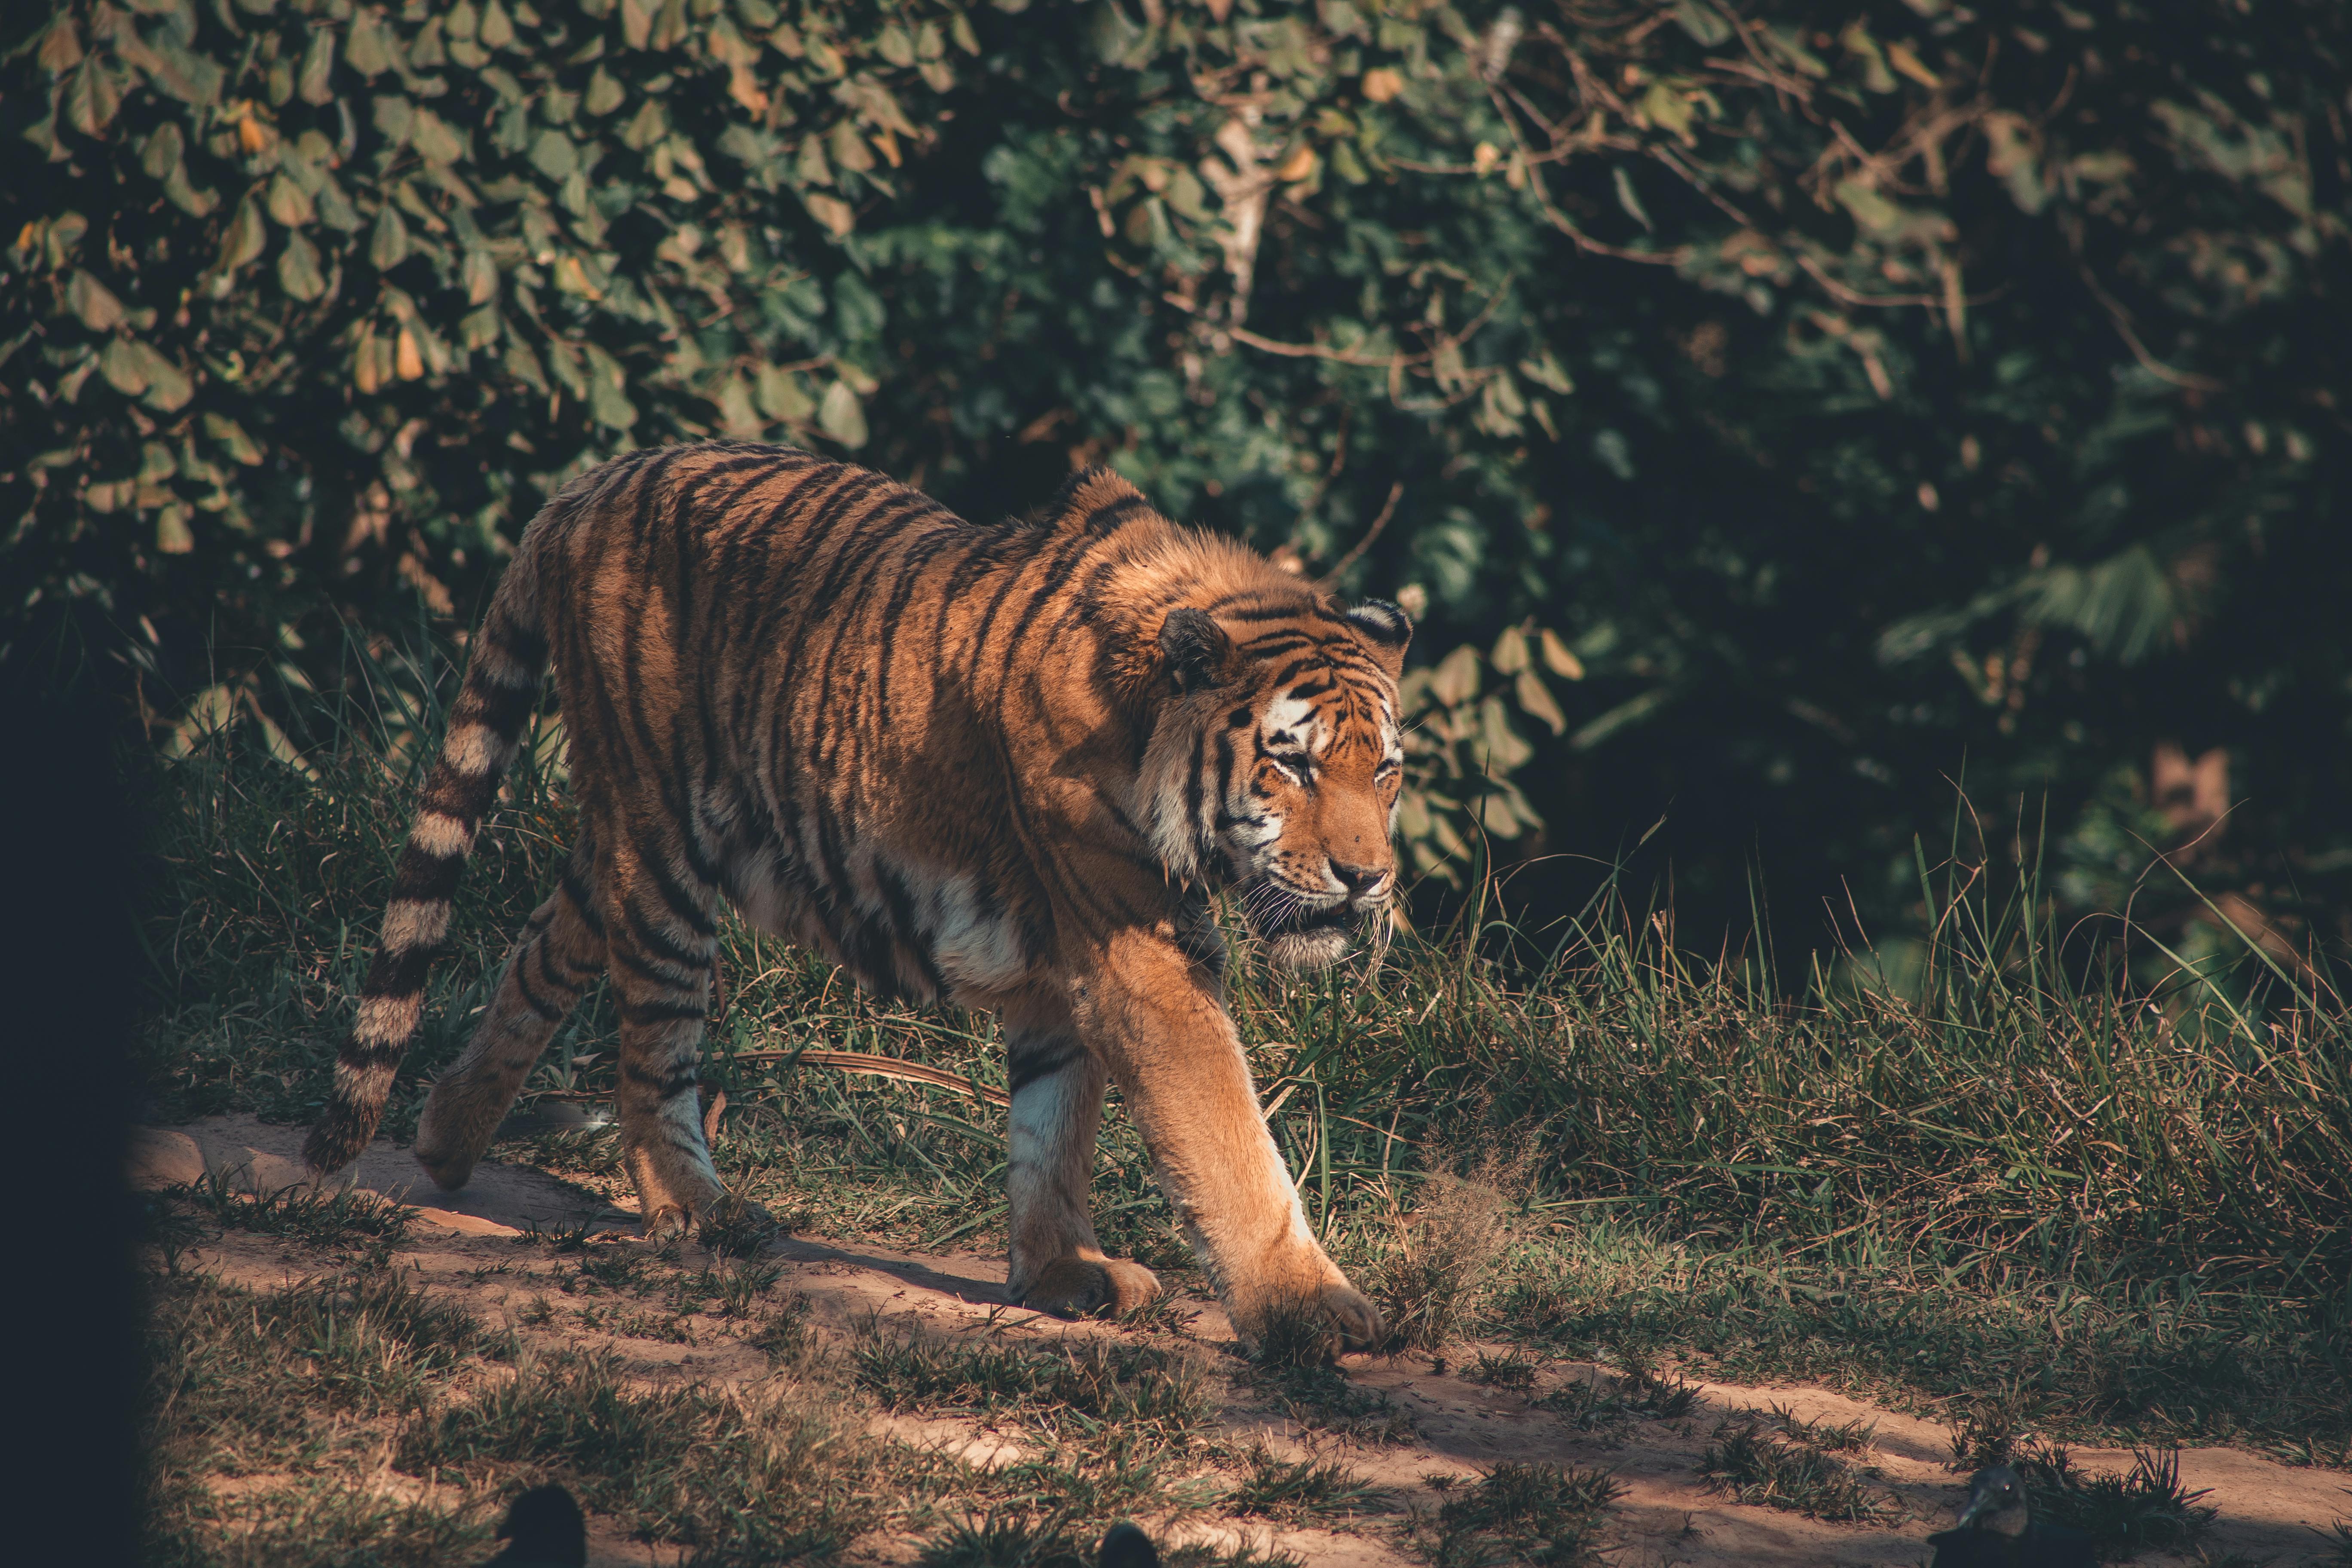 Jungle Safaris in India - Encountering Wildlife in their Natural Habitat